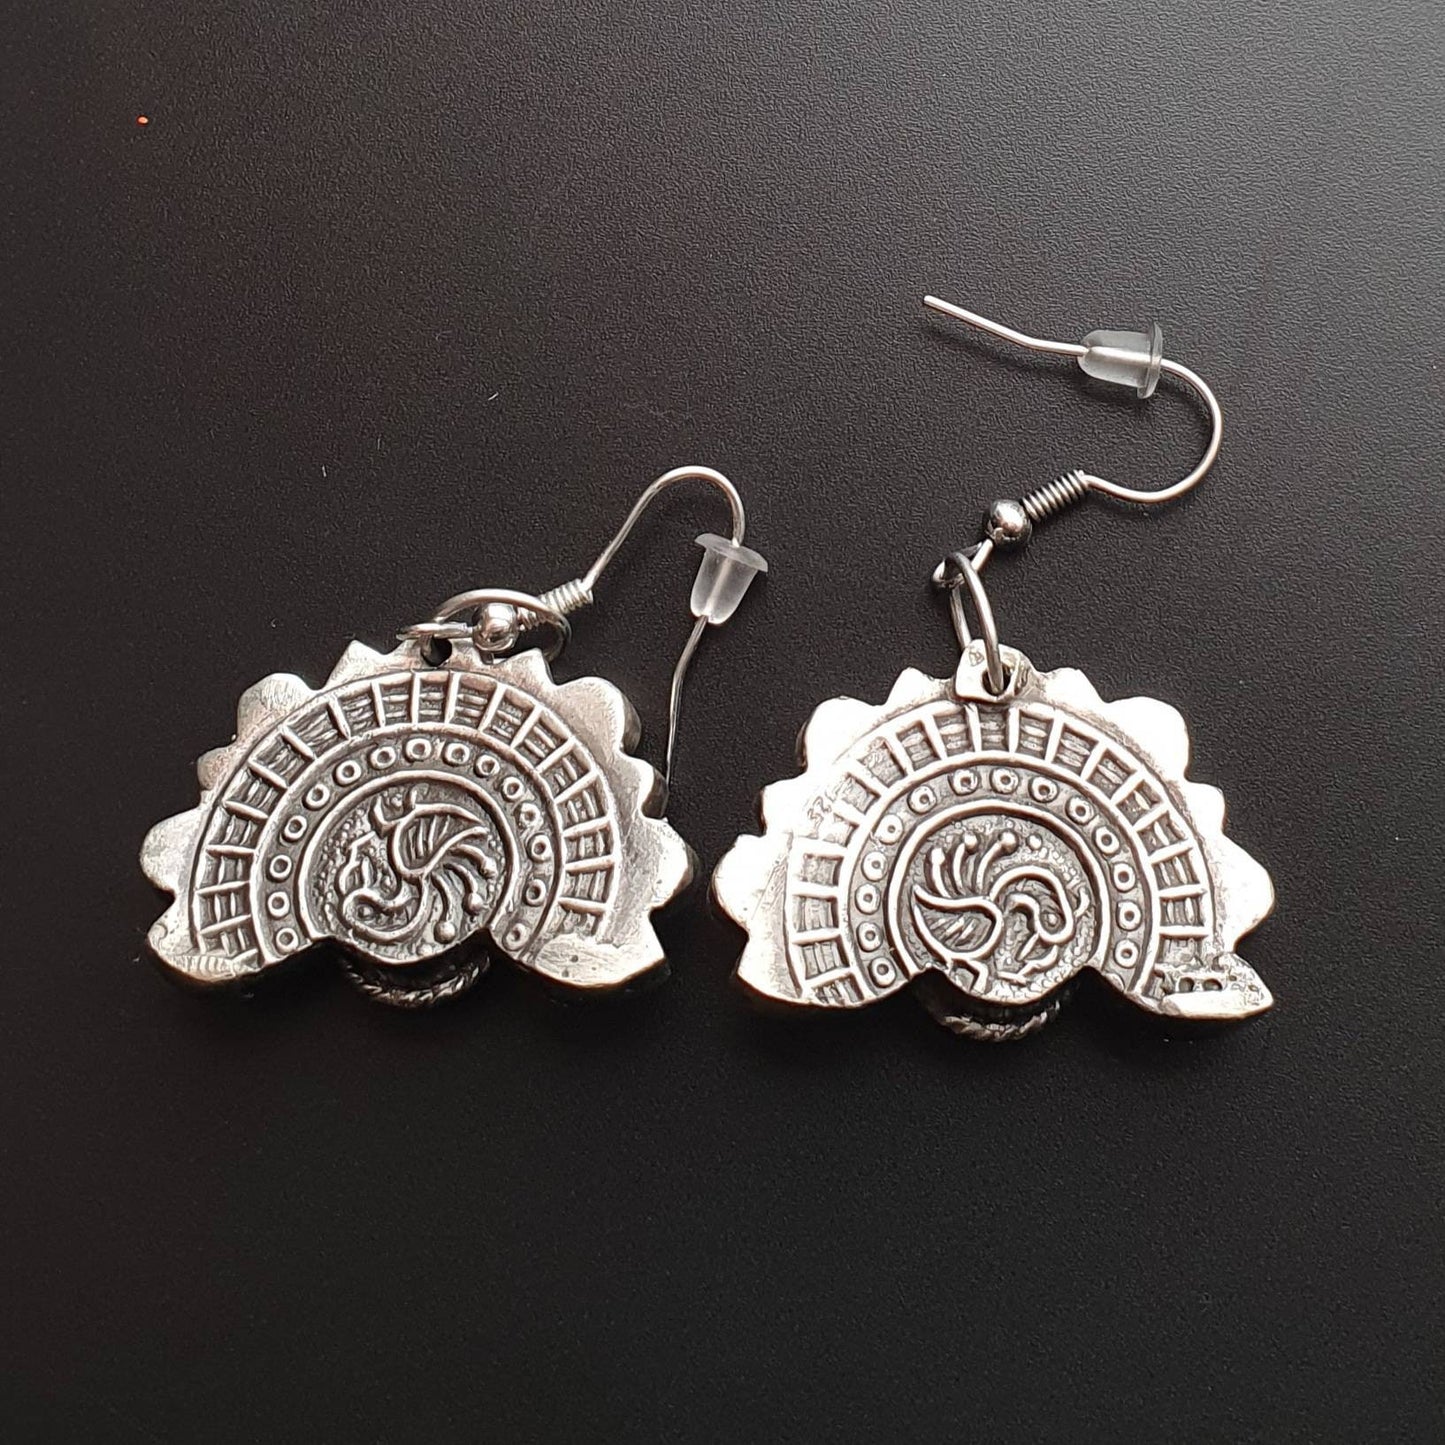 Sterling silver earrings, silver earrings, floral earrings,red earrings, ethnic, tribal, jewelry, gifts, vintage, handmade, gemstone jewelry